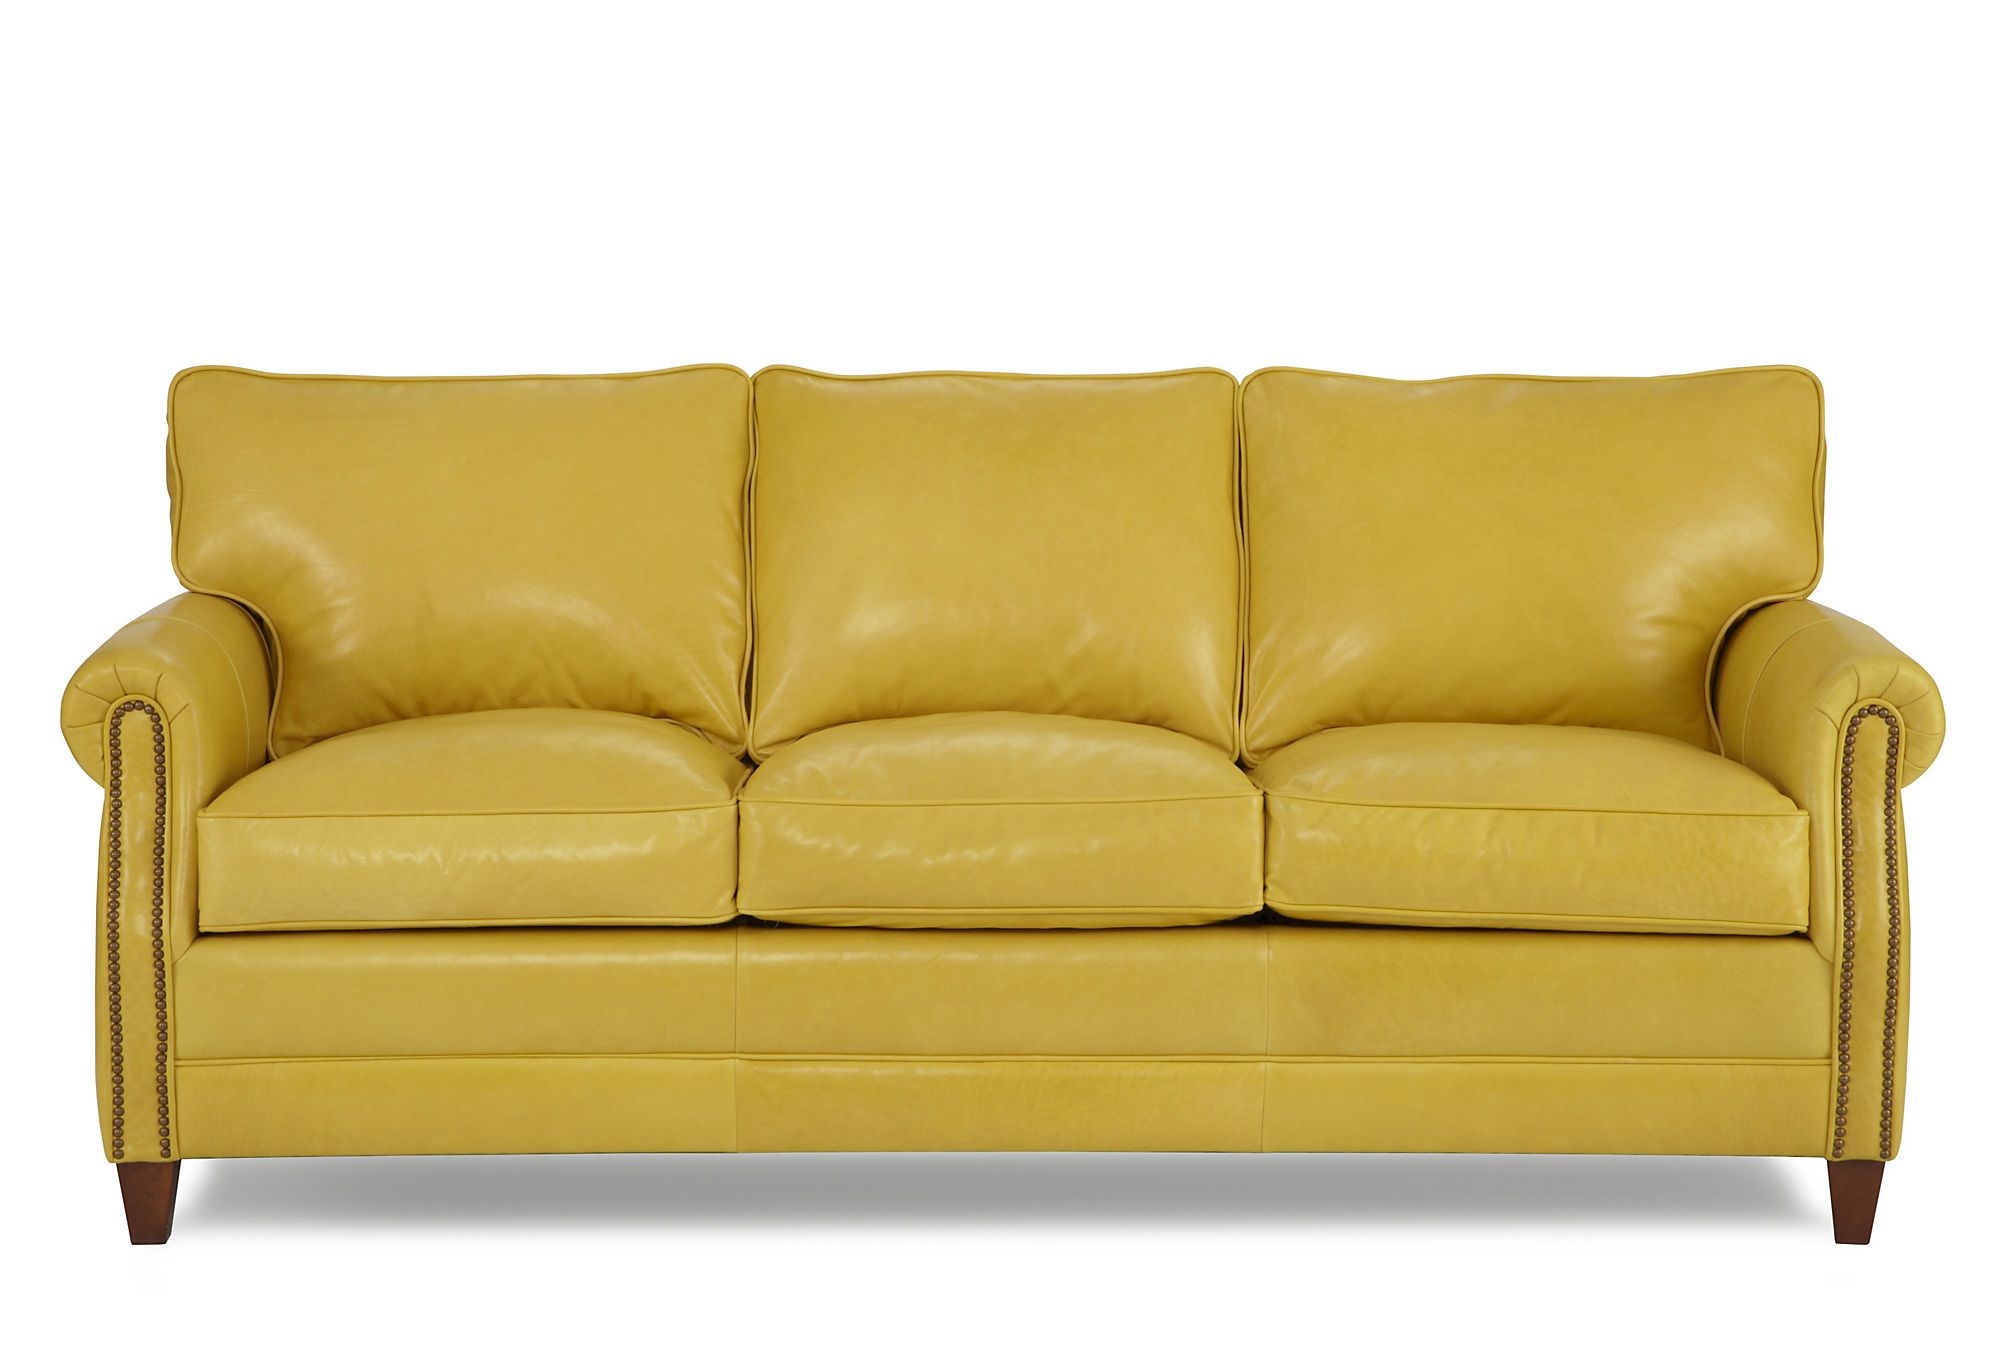 yellow walls brown leather sofa